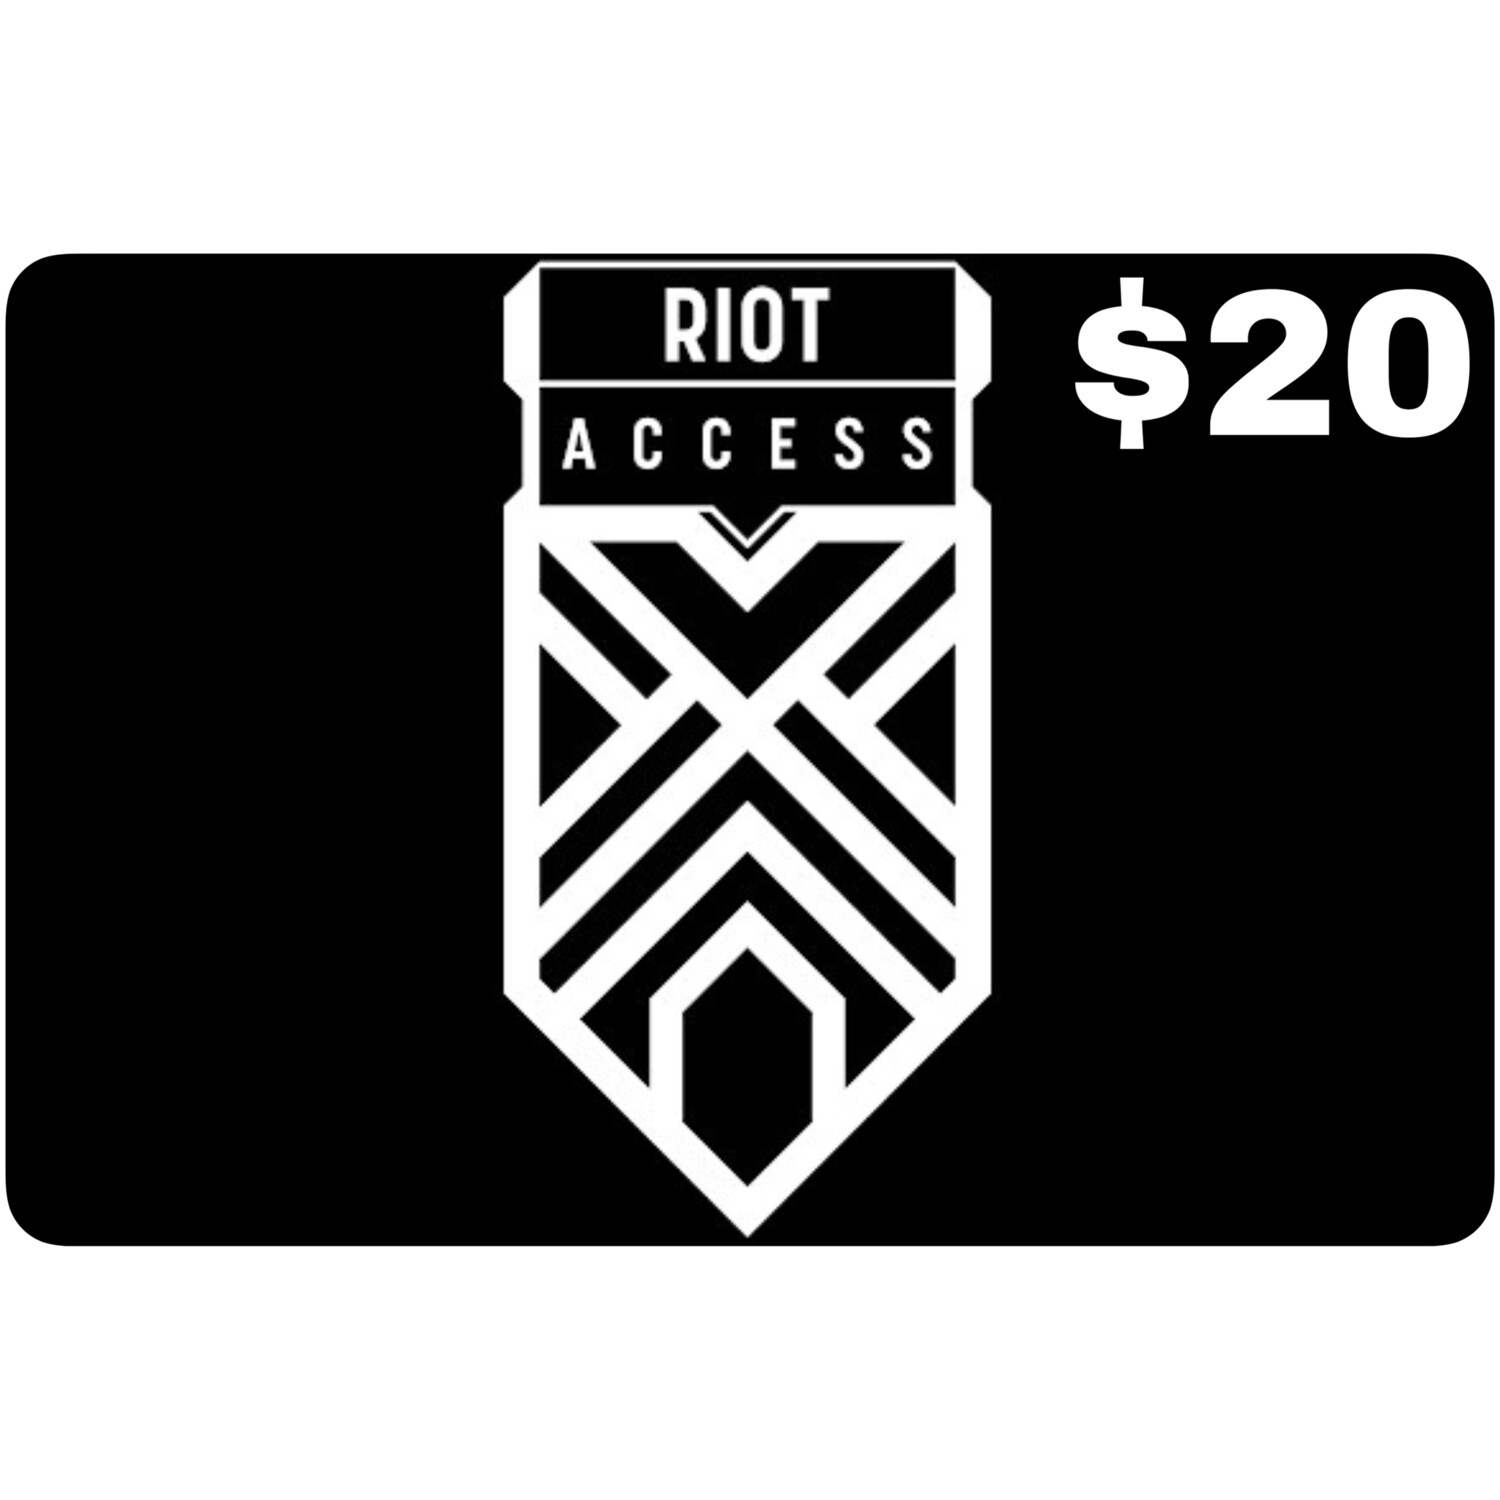 Riot Access Code $20 (NA Server)